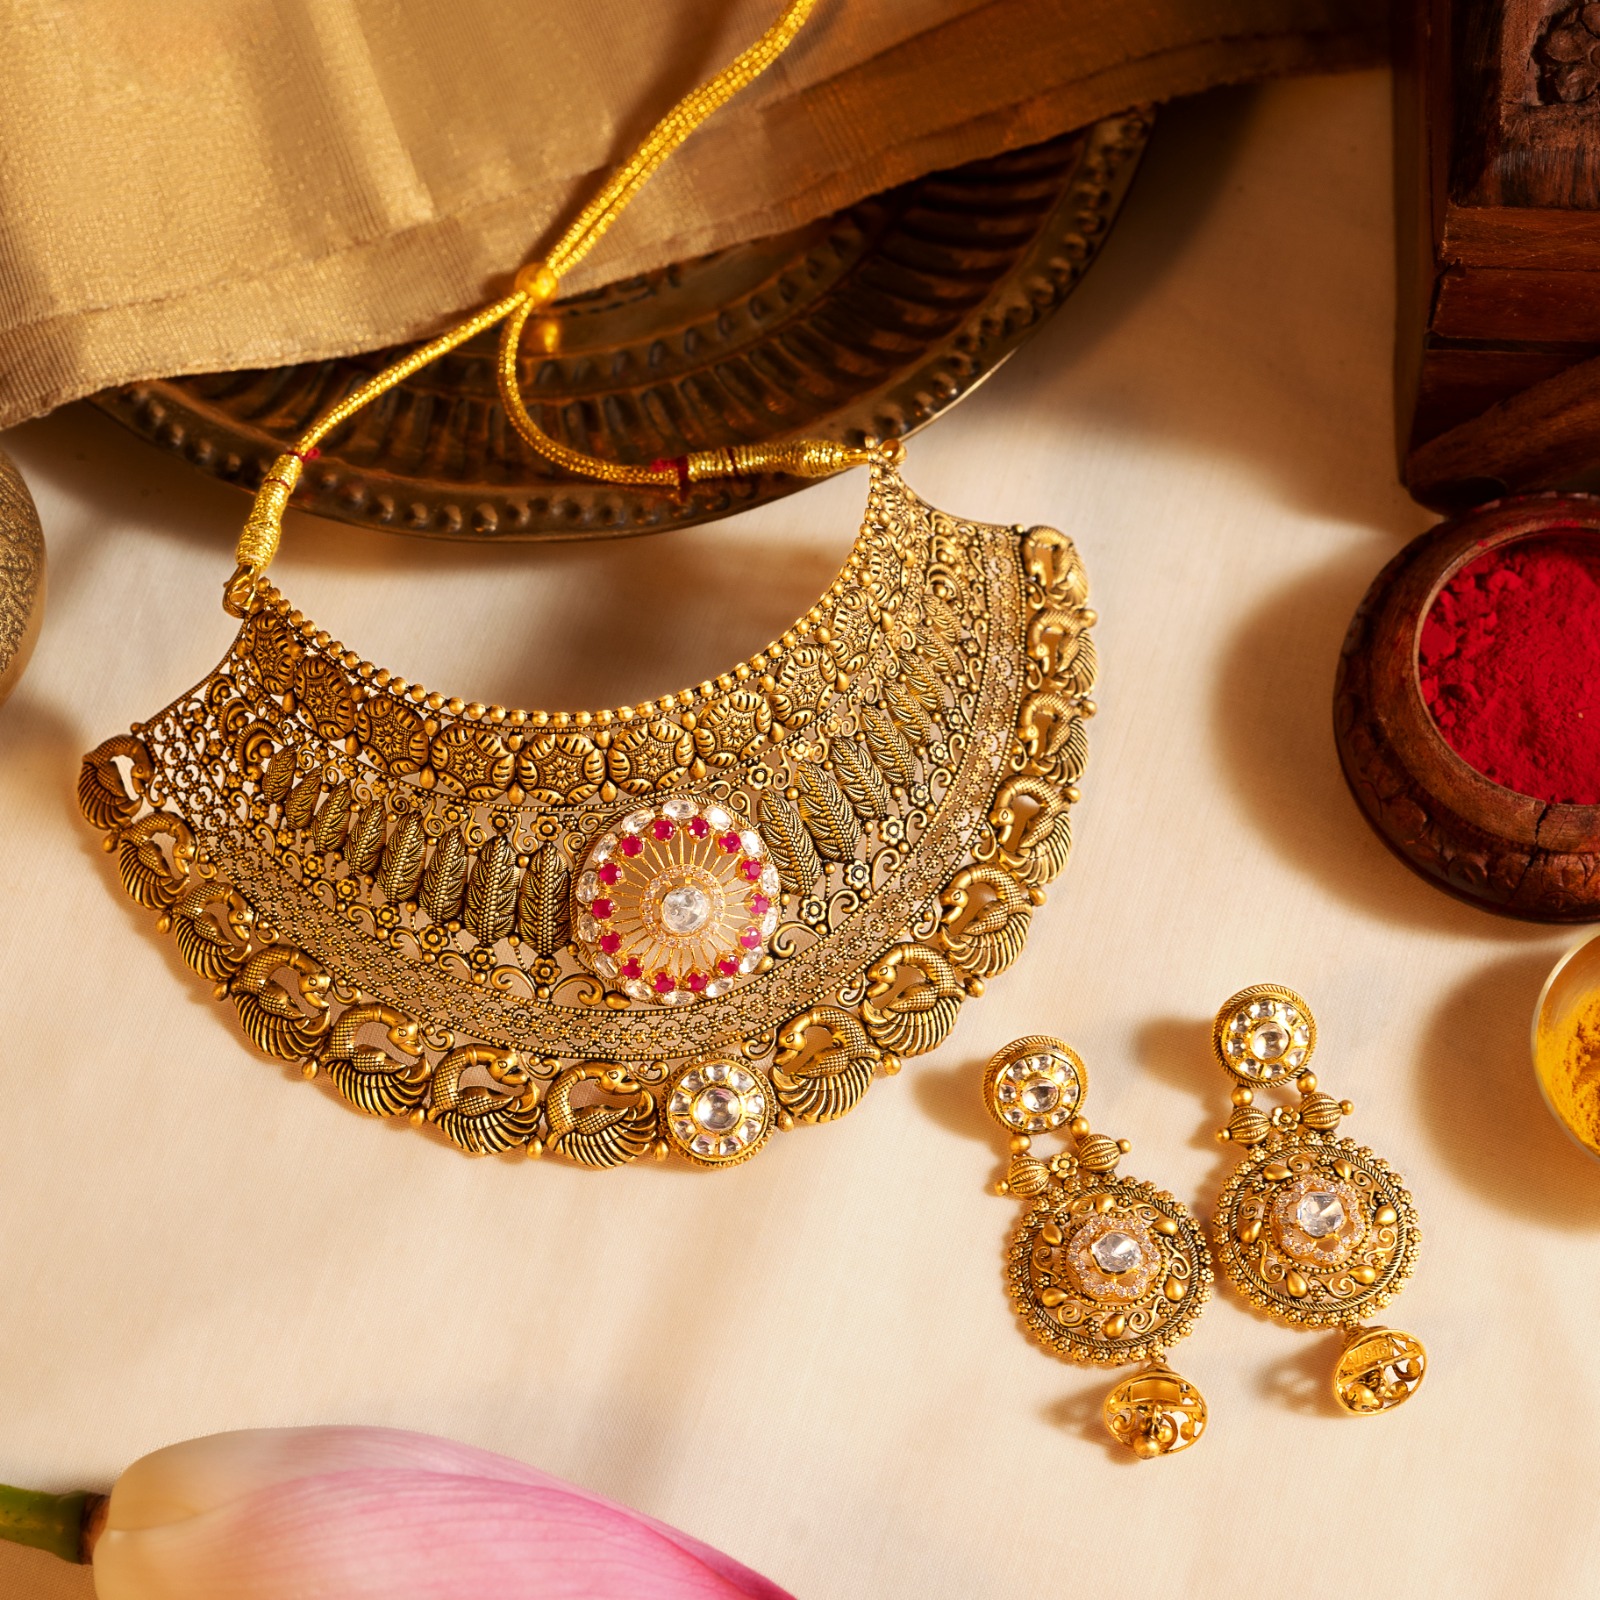 On the auspicious occasion of Akshaya Tritiya, Lala Jugal Kishore Jewelers launches temple jewelery collection 'Iraya'.